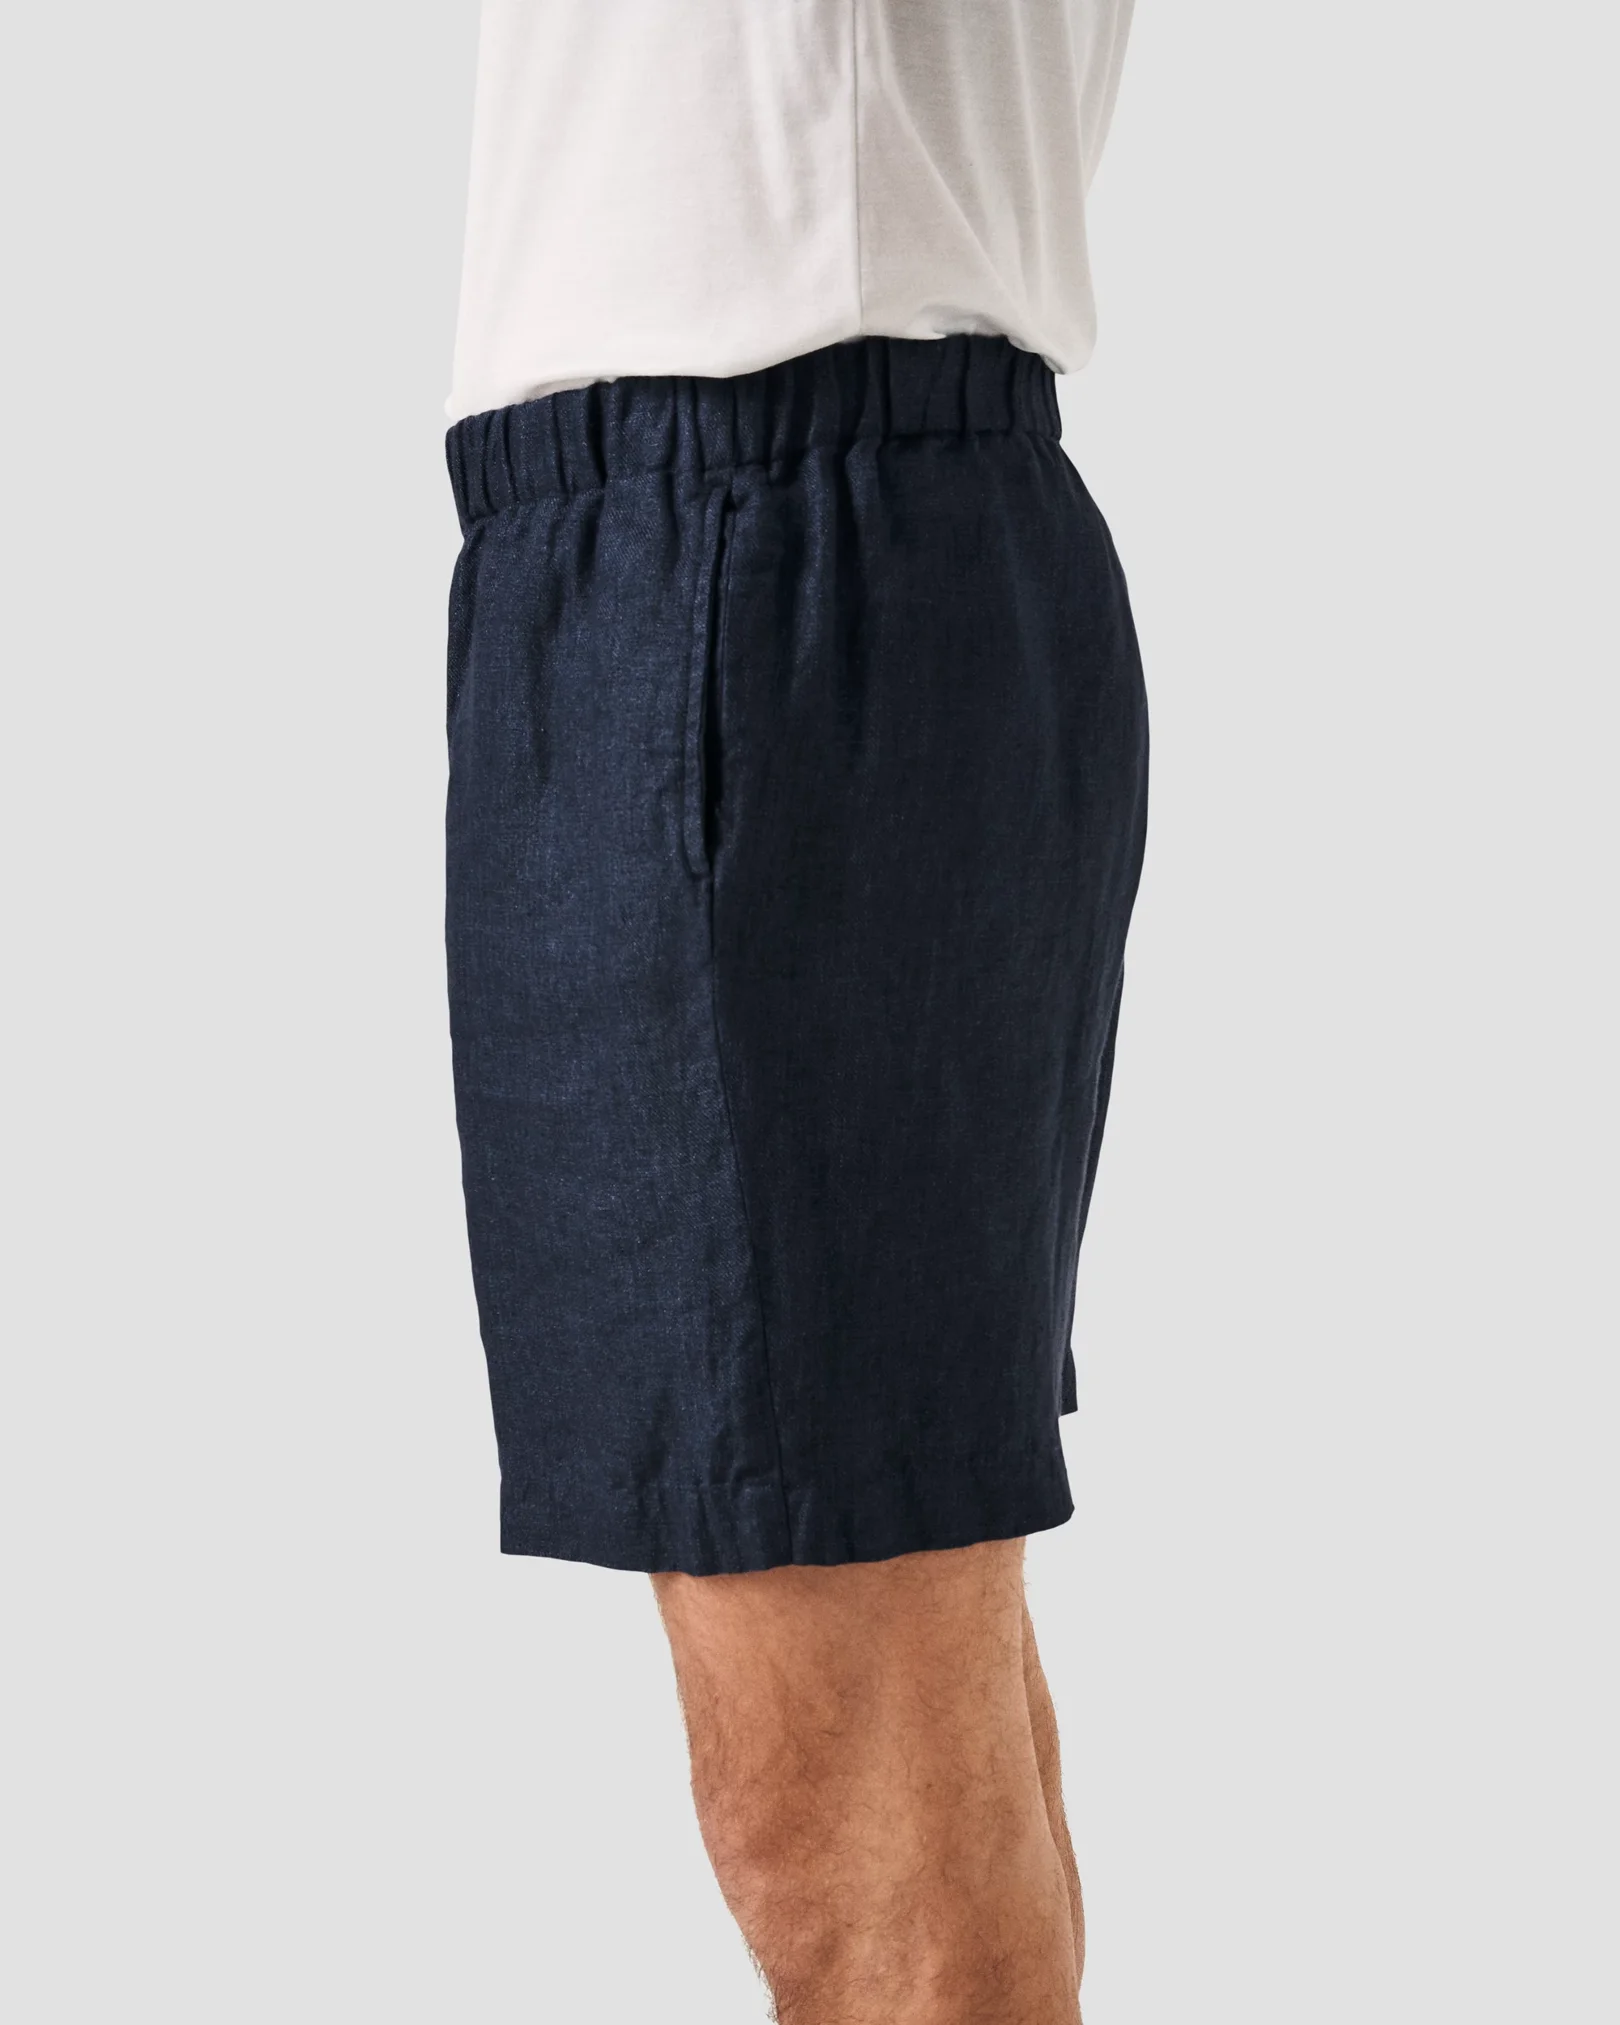 Eton - navy blue linen shorts